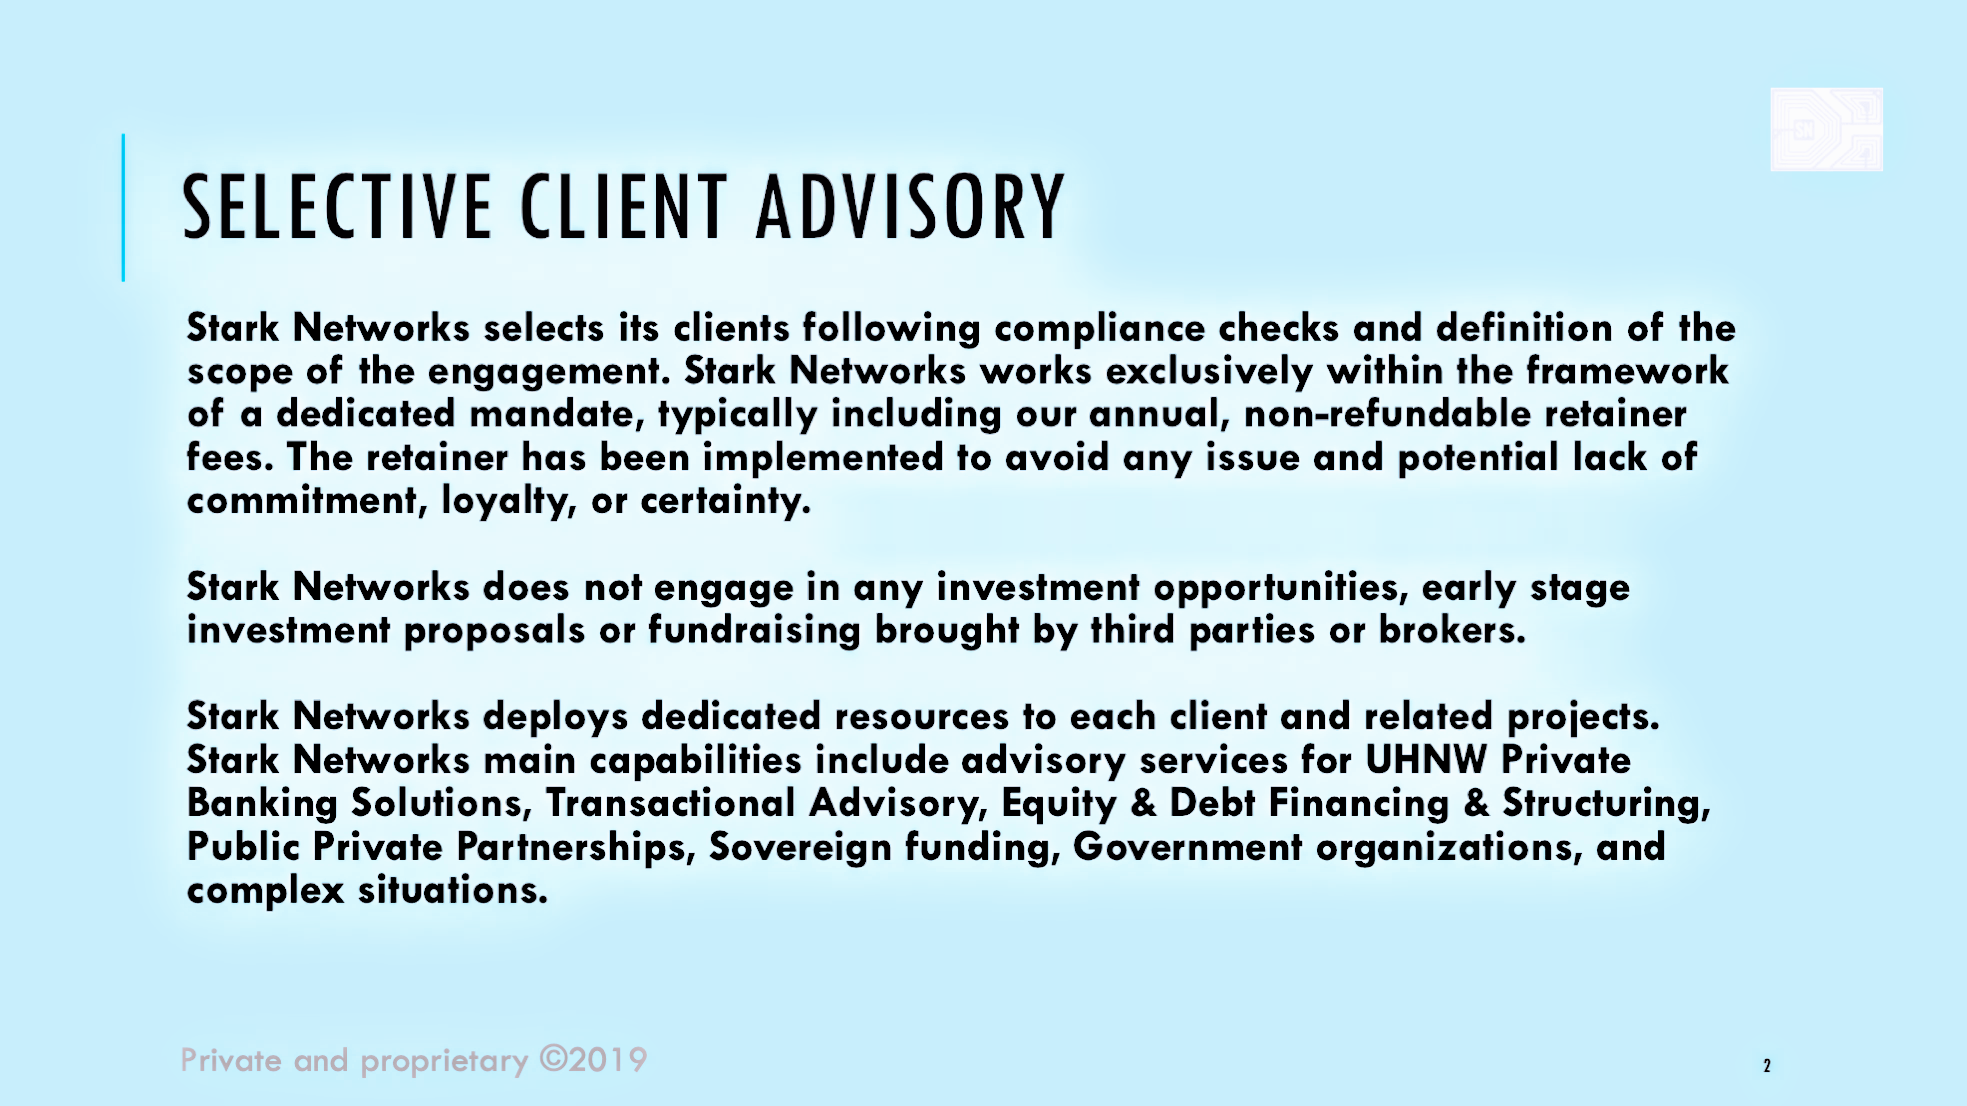 Stark Networks HK Selective Client Advisory